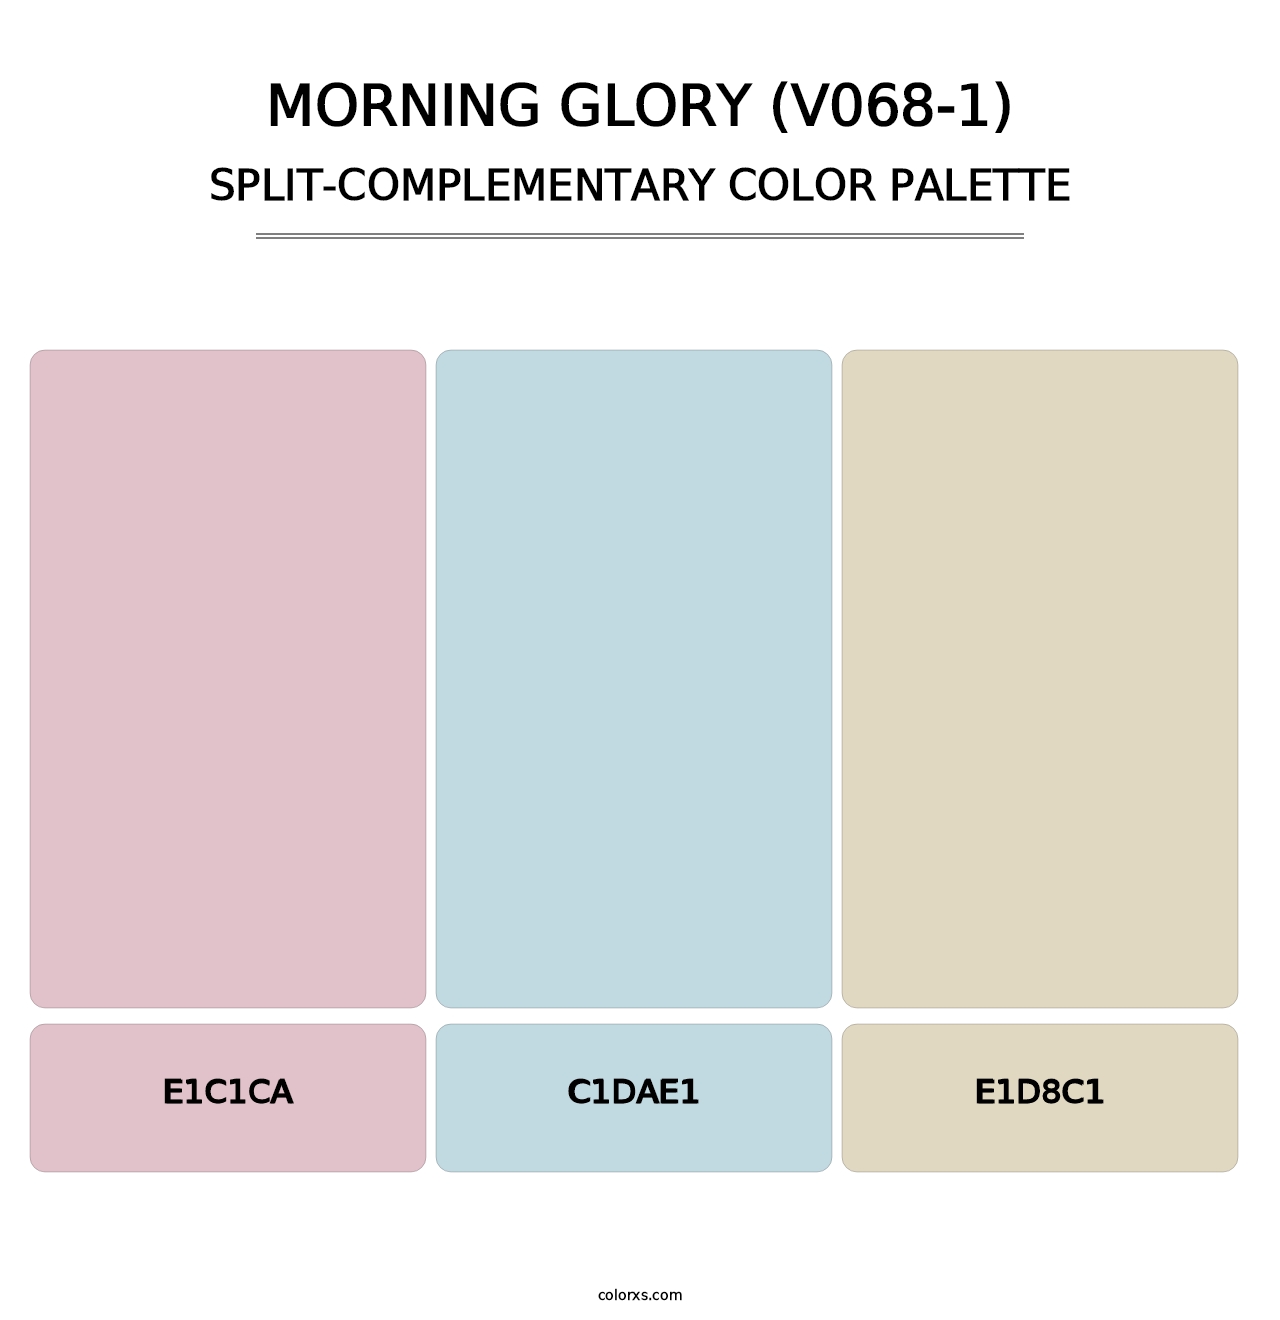 Morning Glory (V068-1) - Split-Complementary Color Palette